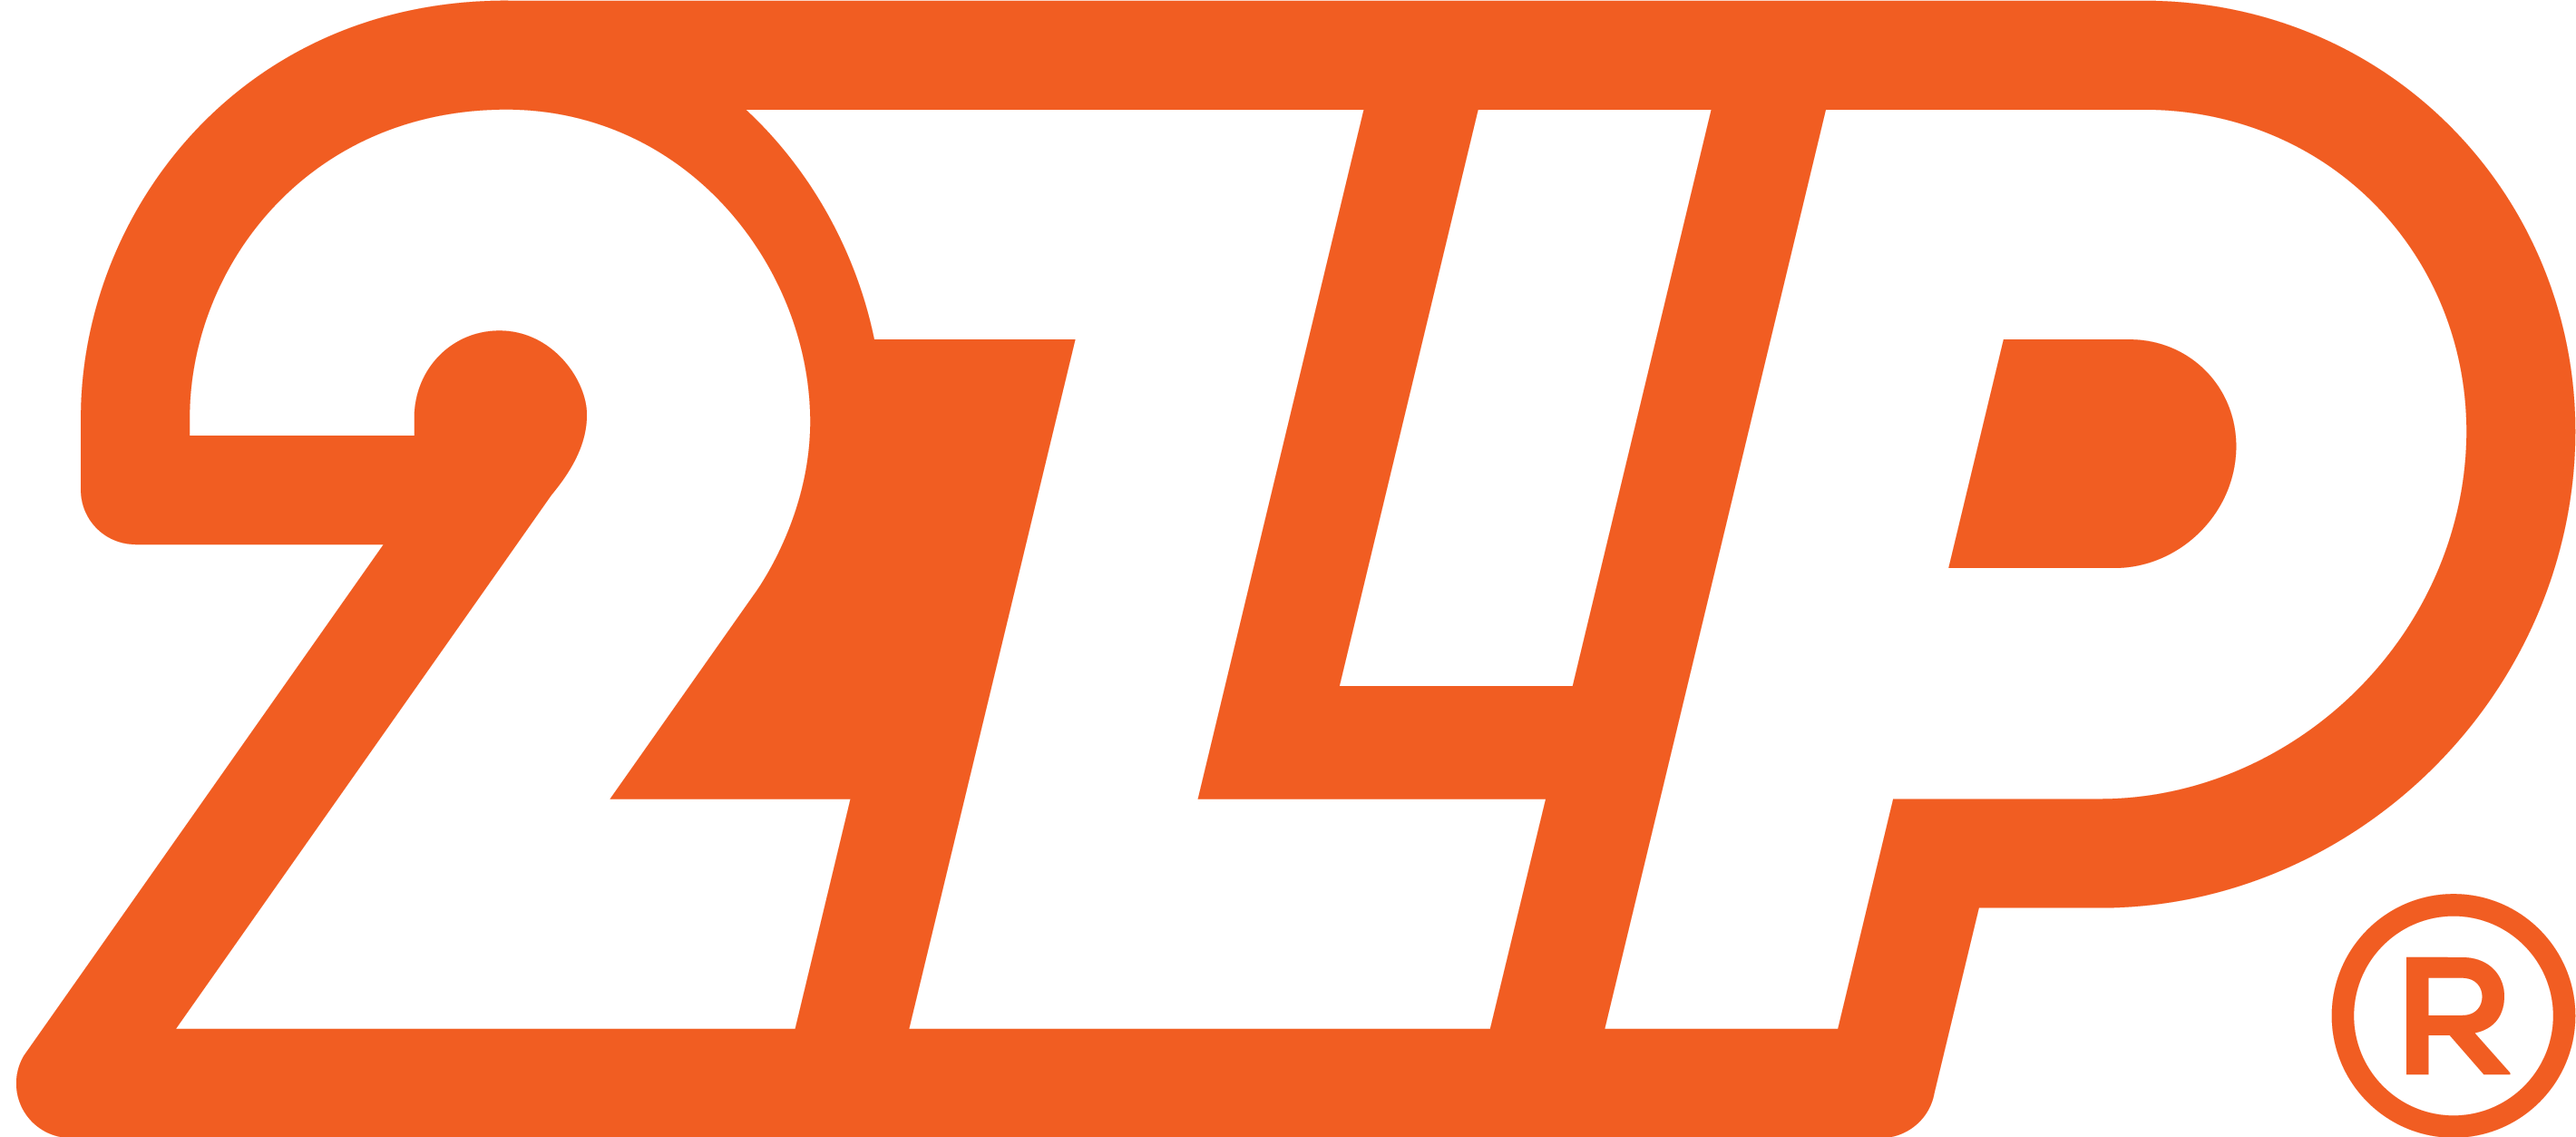 Logotipo del miembro